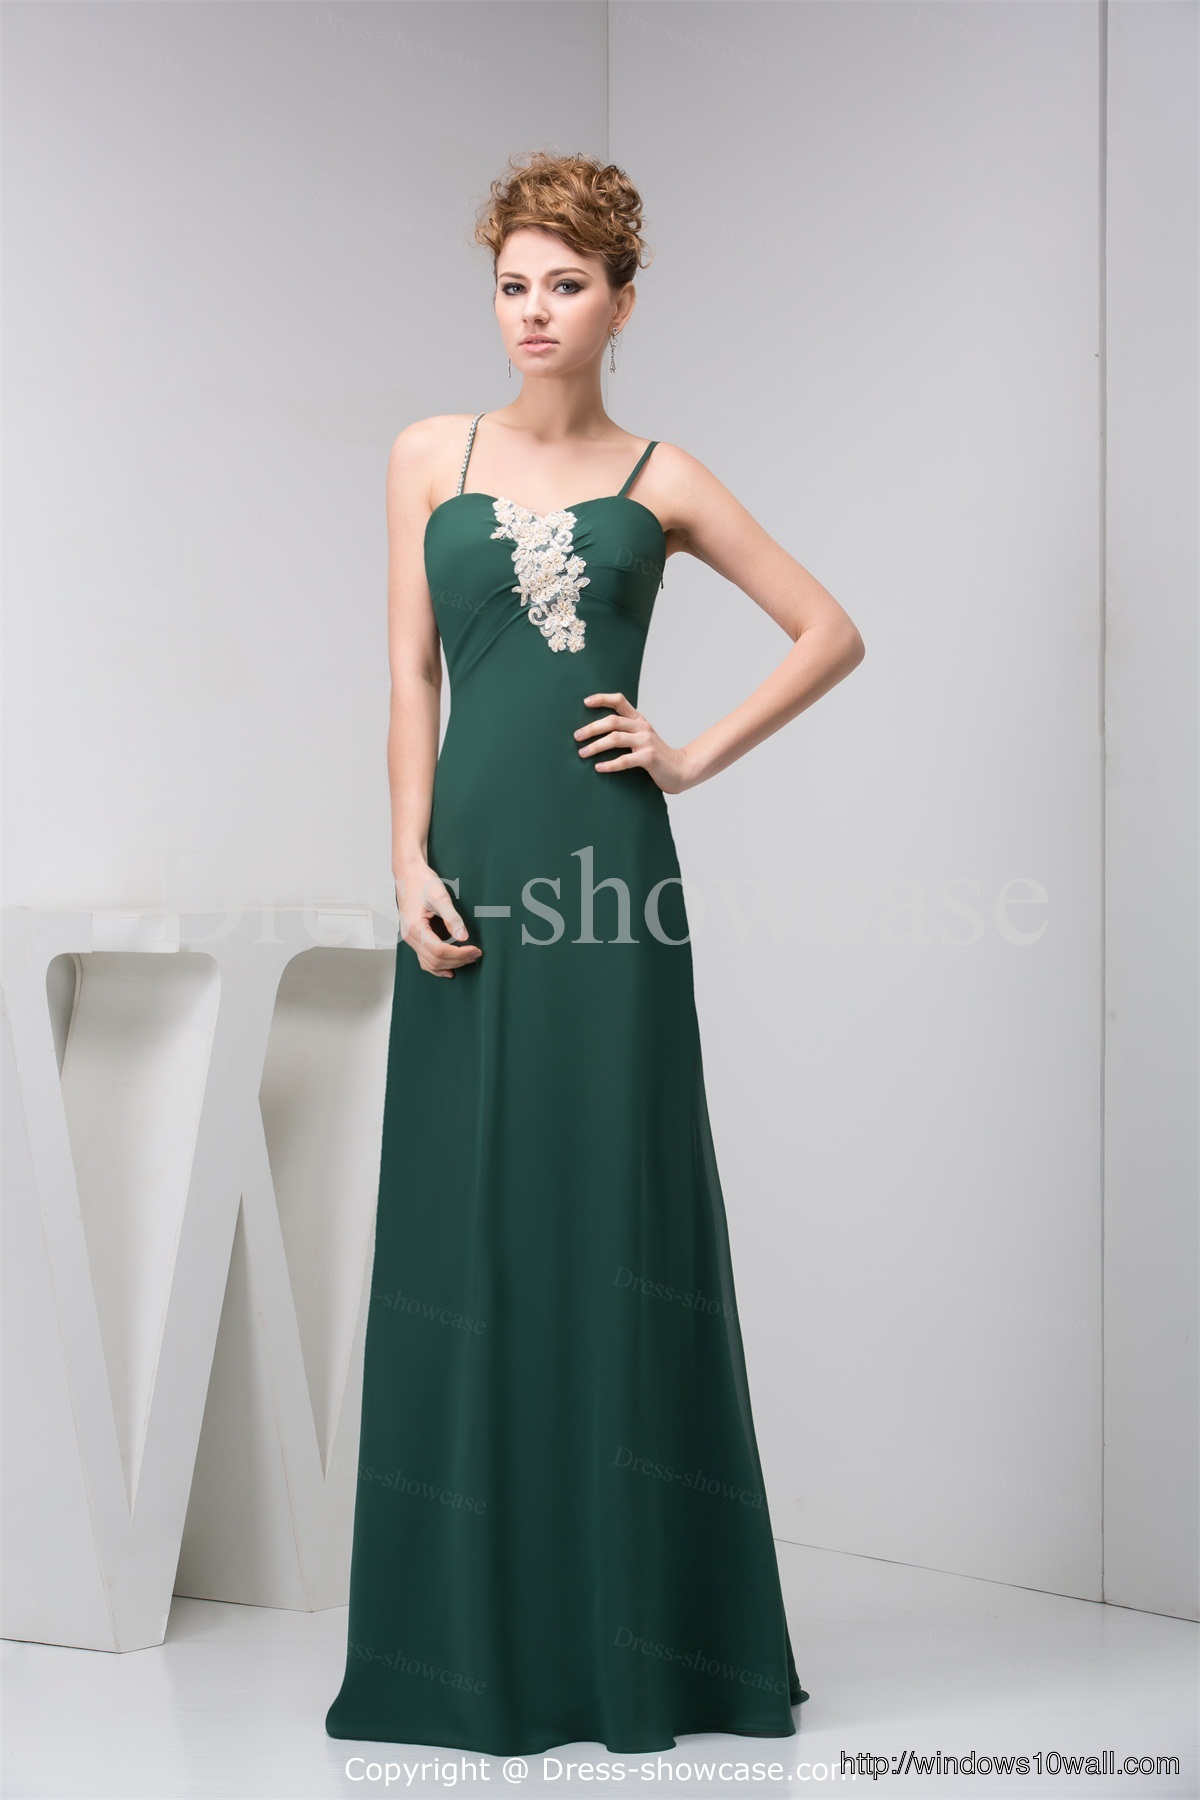 sleeveless-chiffon-prom-dresses-background-wallpaper